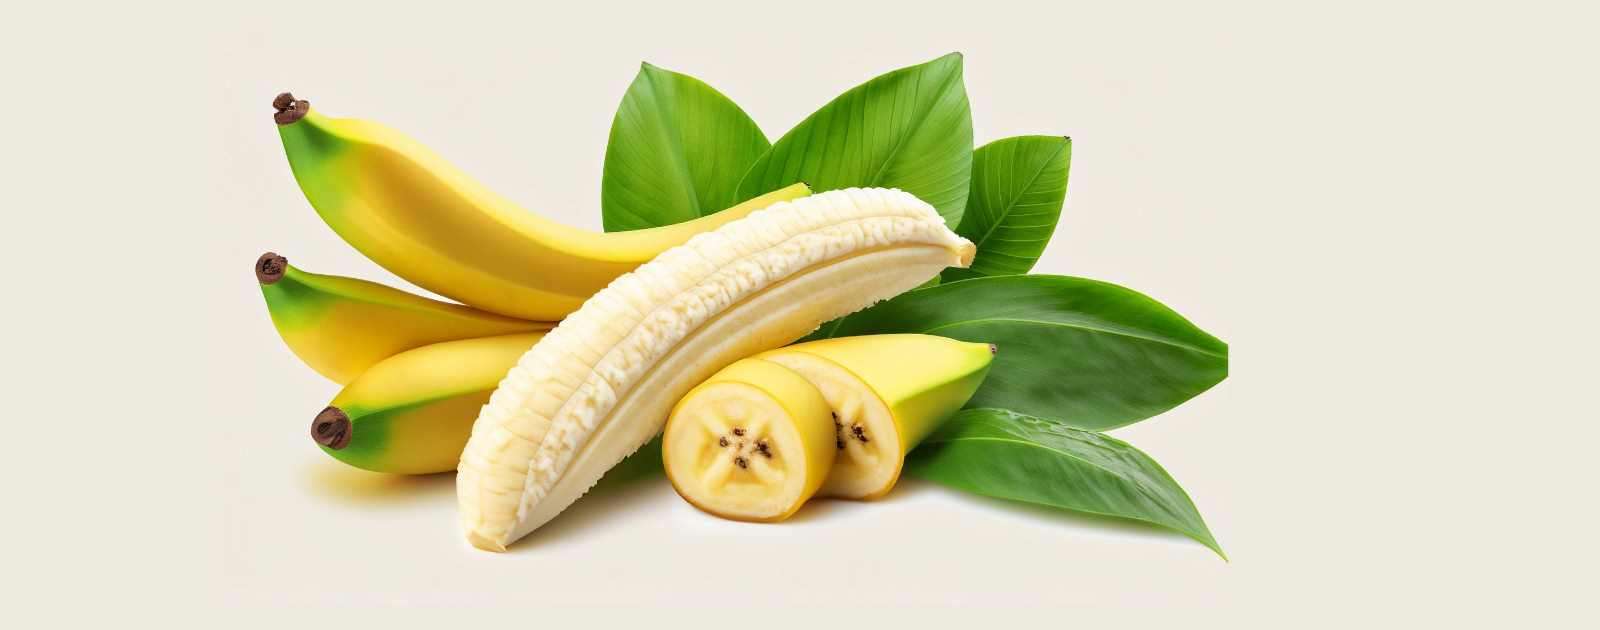 Is Banana a Melon or a Fruit